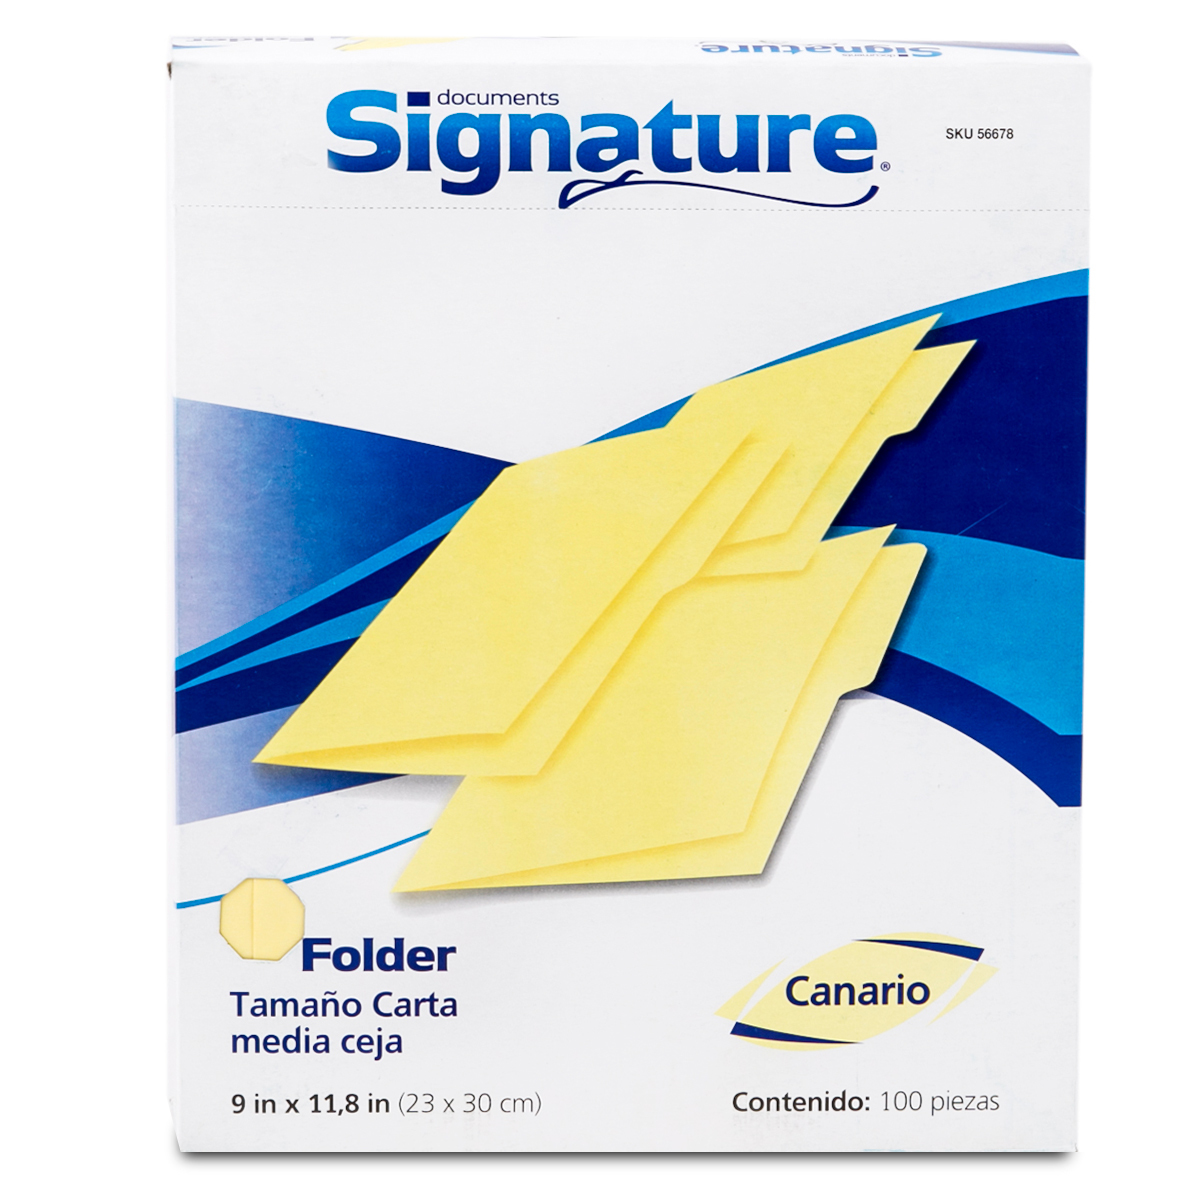 Folders Carta con Media Ceja Signature / Canario / 100 piezas